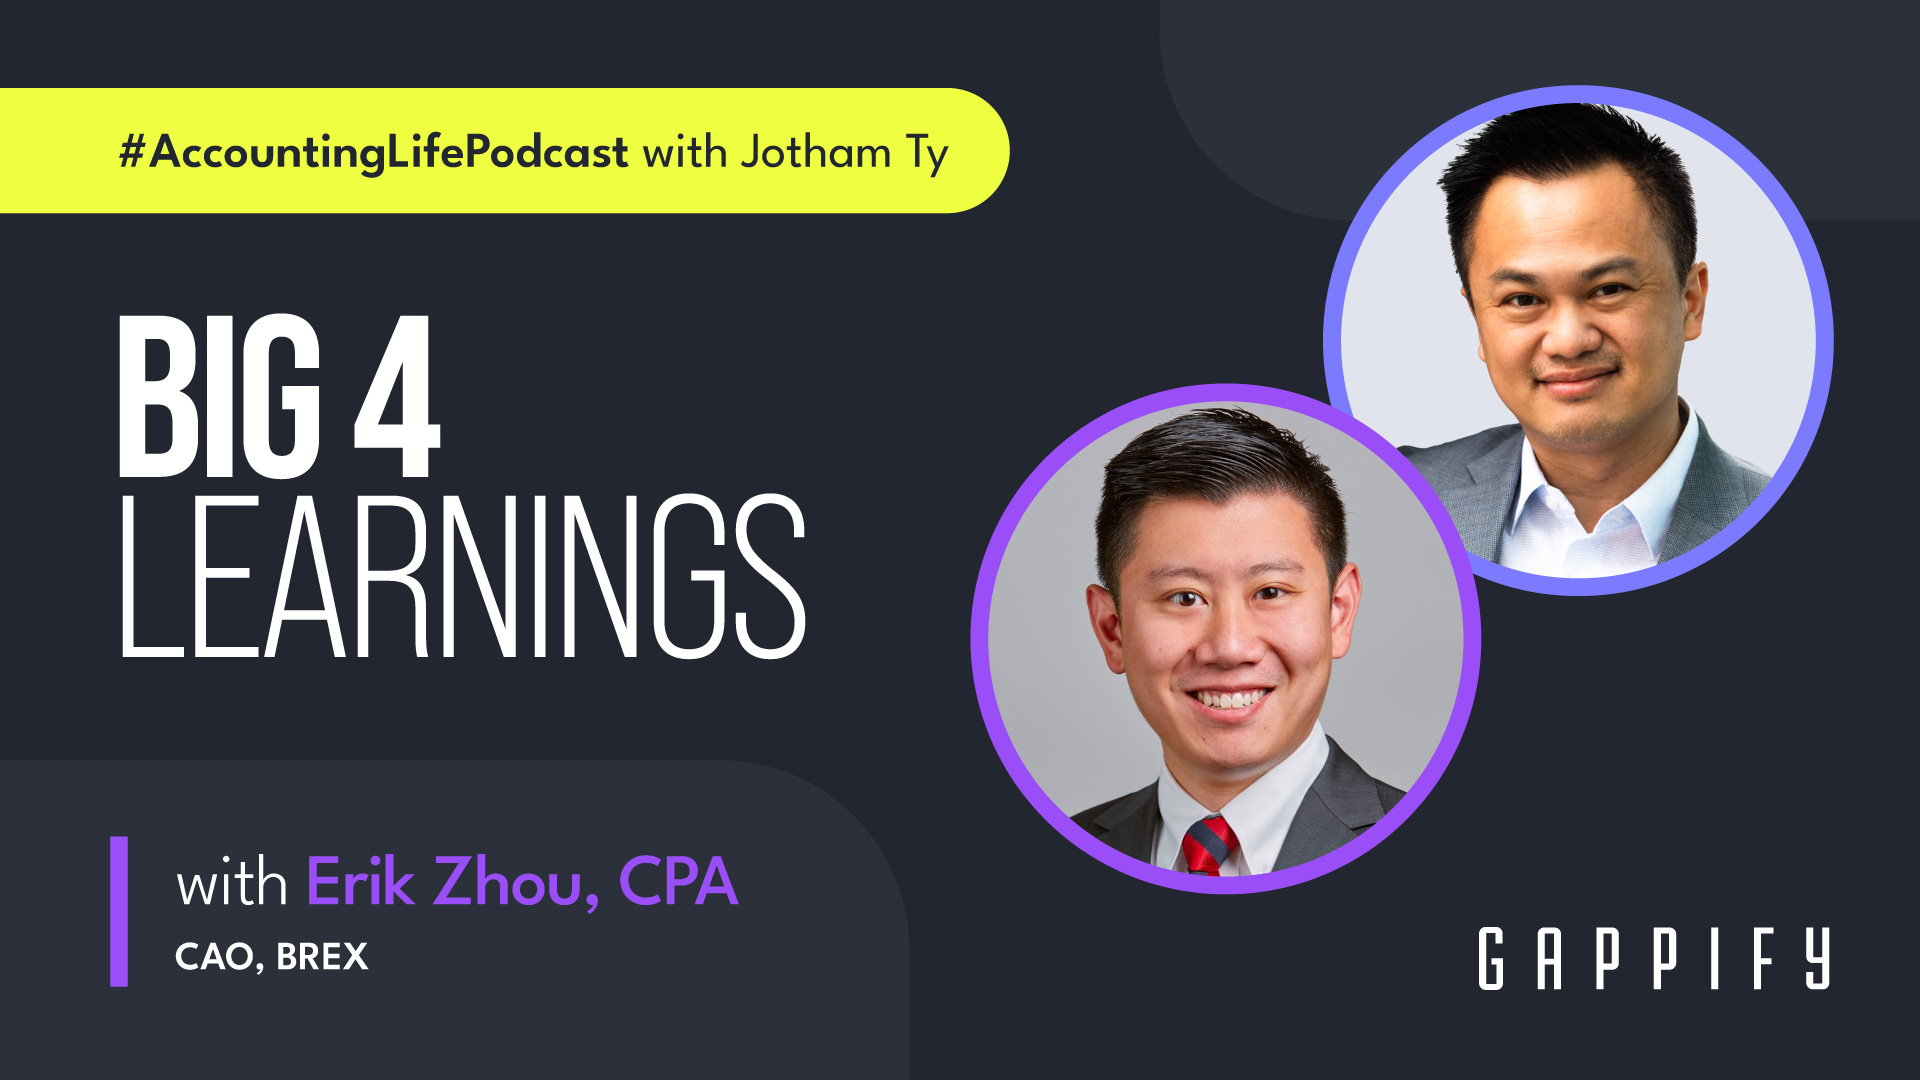 Podcast - Big 4 Learnings with Erik Zhou